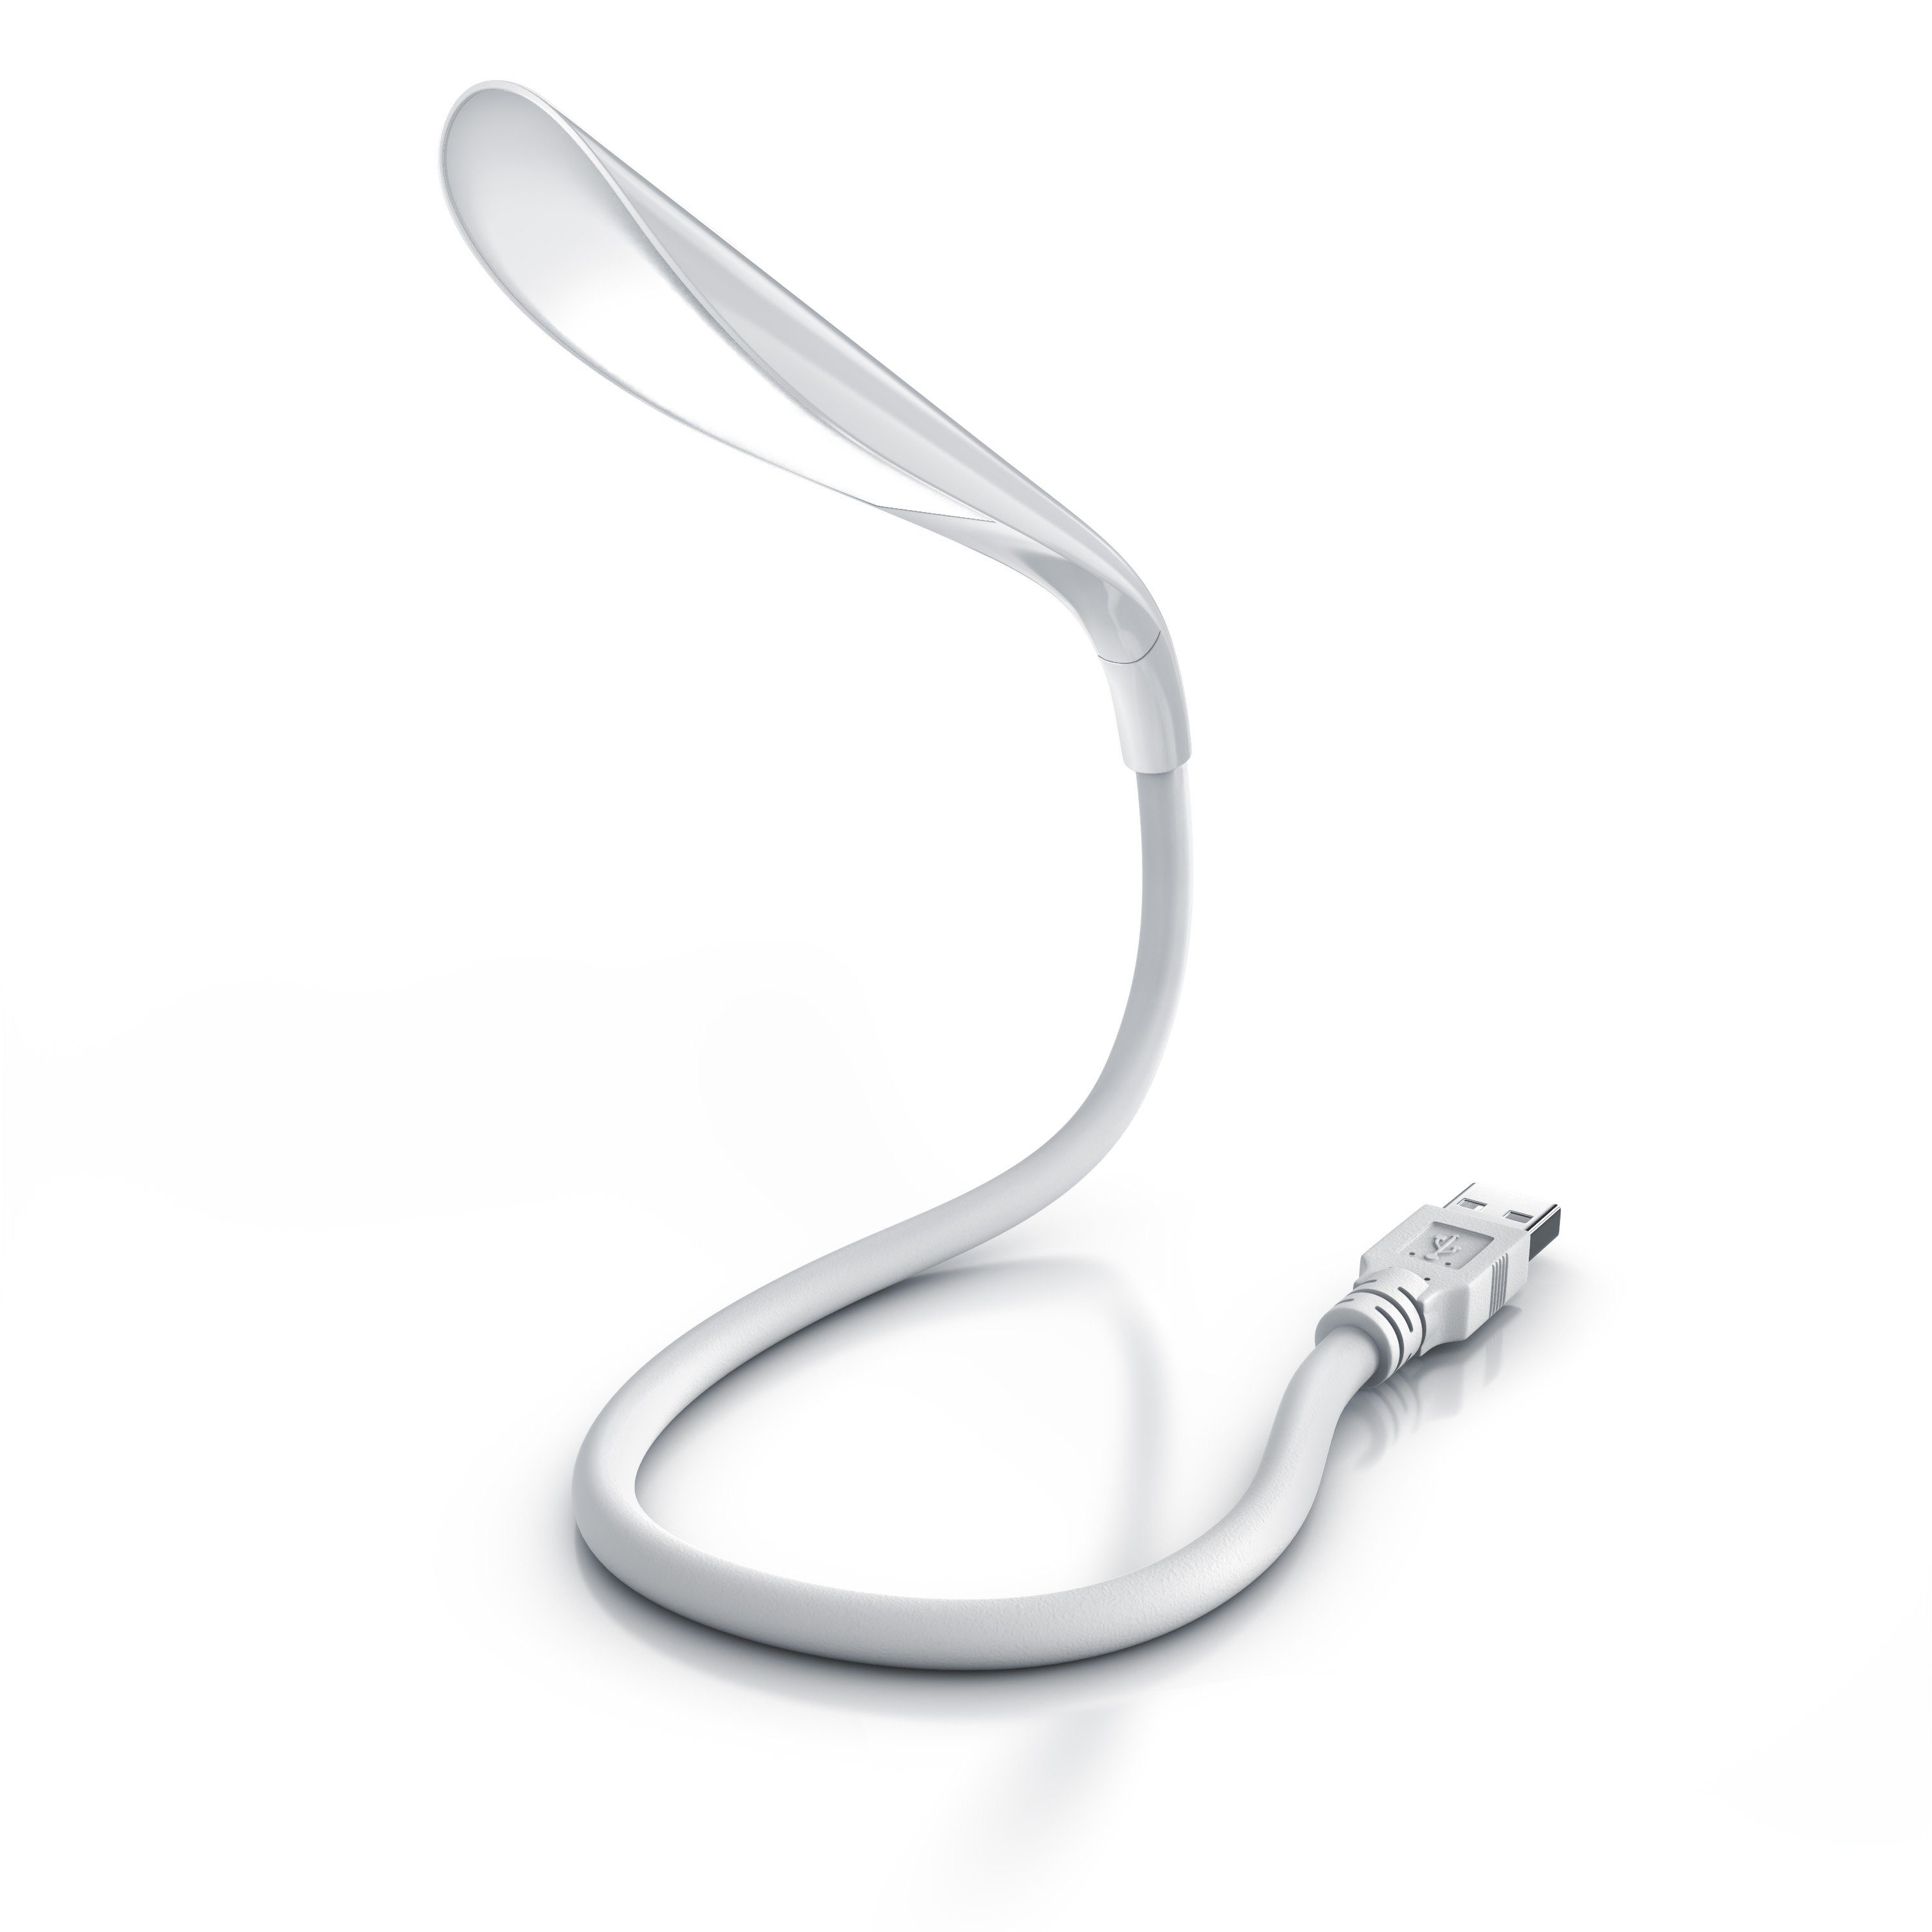 Leselampe, Schwanenhals USB LED CSL mit weiß Lampe mit LED Leselampe flexibel Anschluss